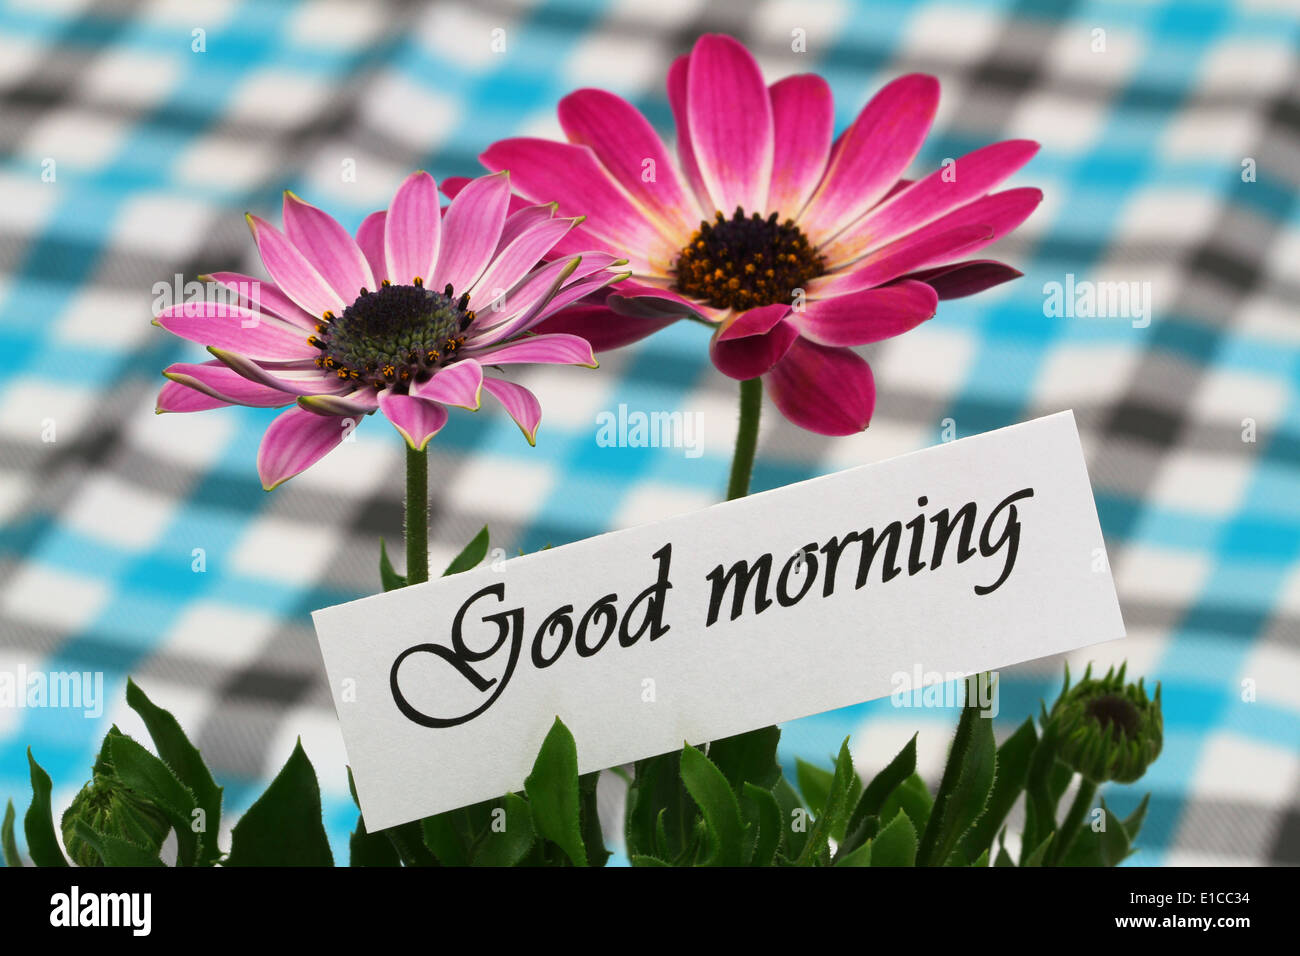 Good morning card with pink gerbera daisies Stock Photo